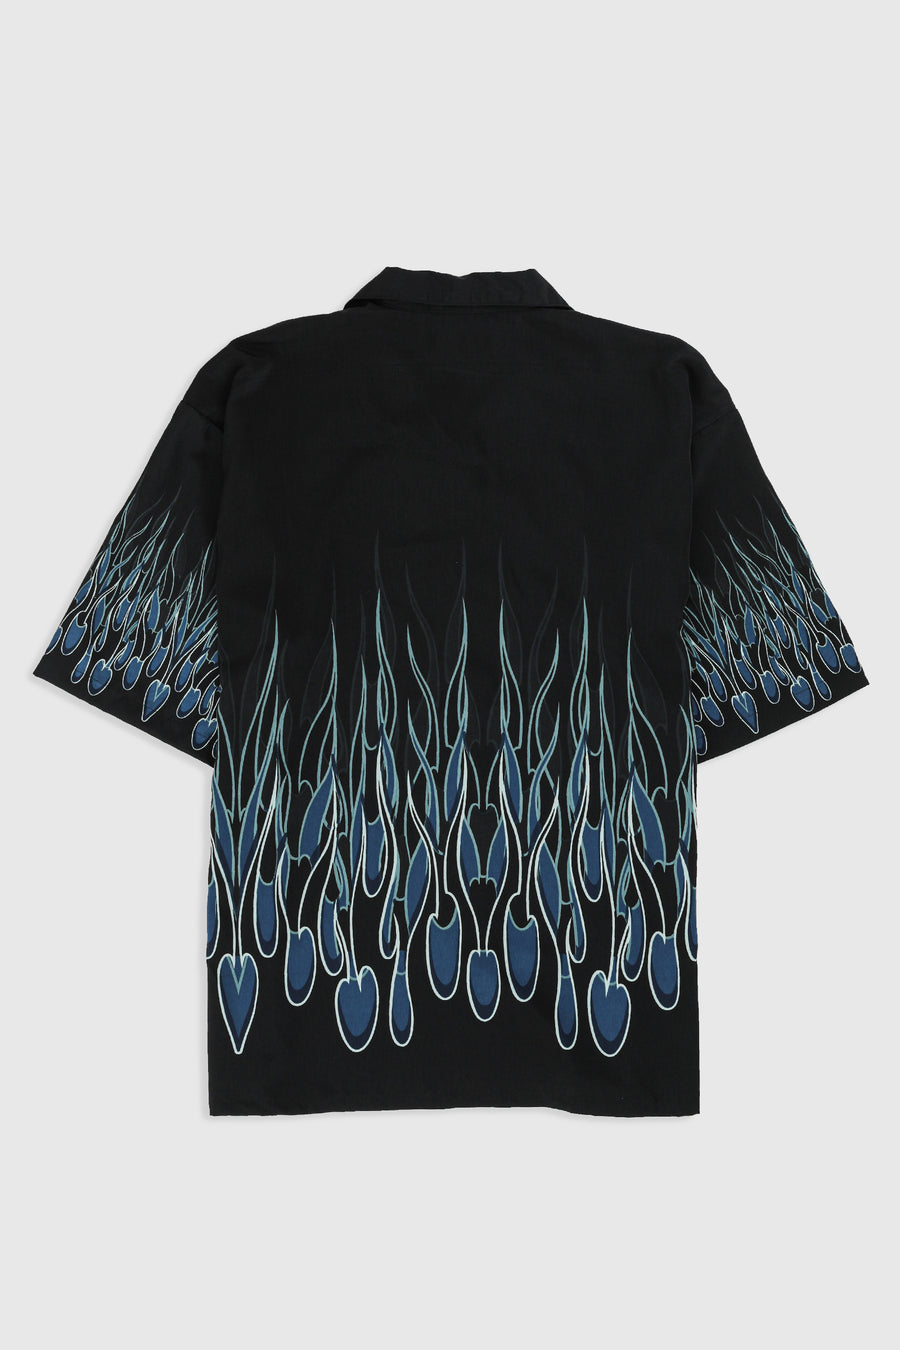 Deadstock Dragonfly Blue Flame Camp Shirt - XL, XXXL